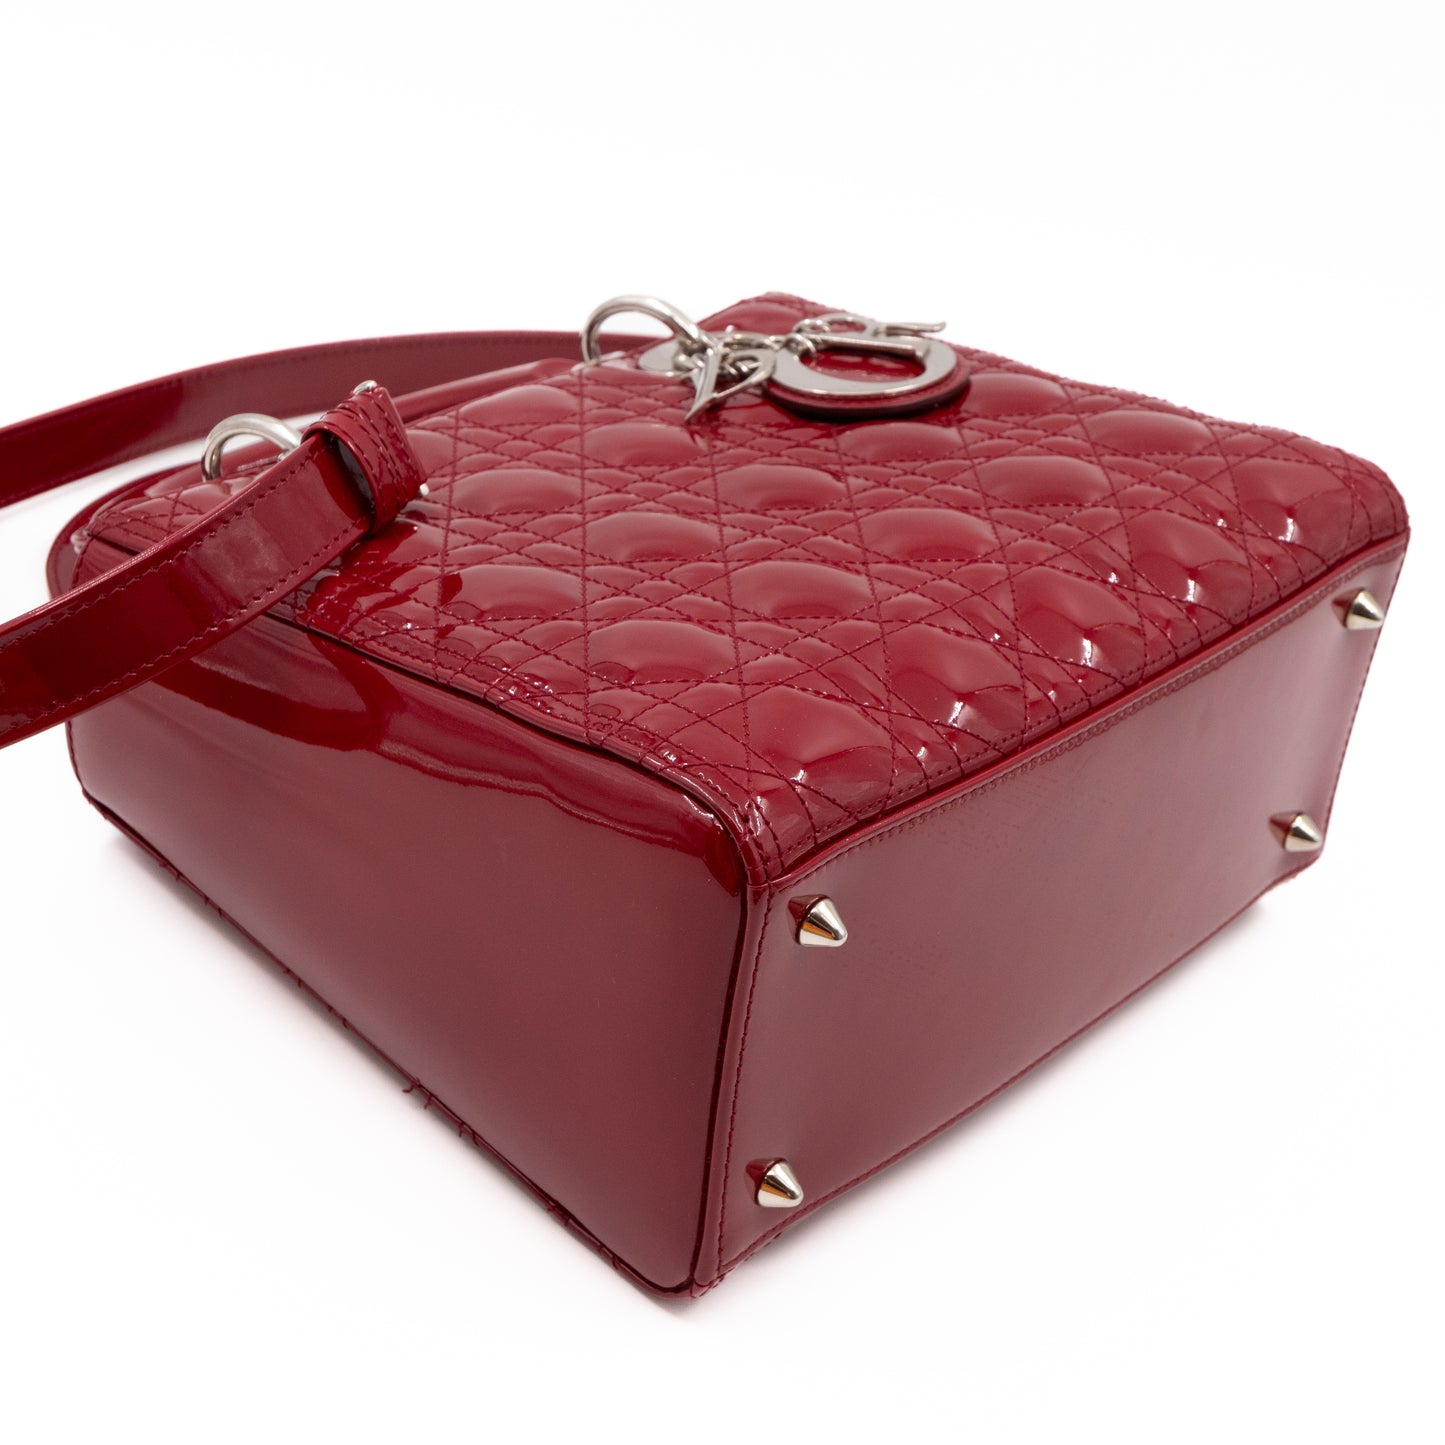 Lady Dior Medium Red Patent Leather